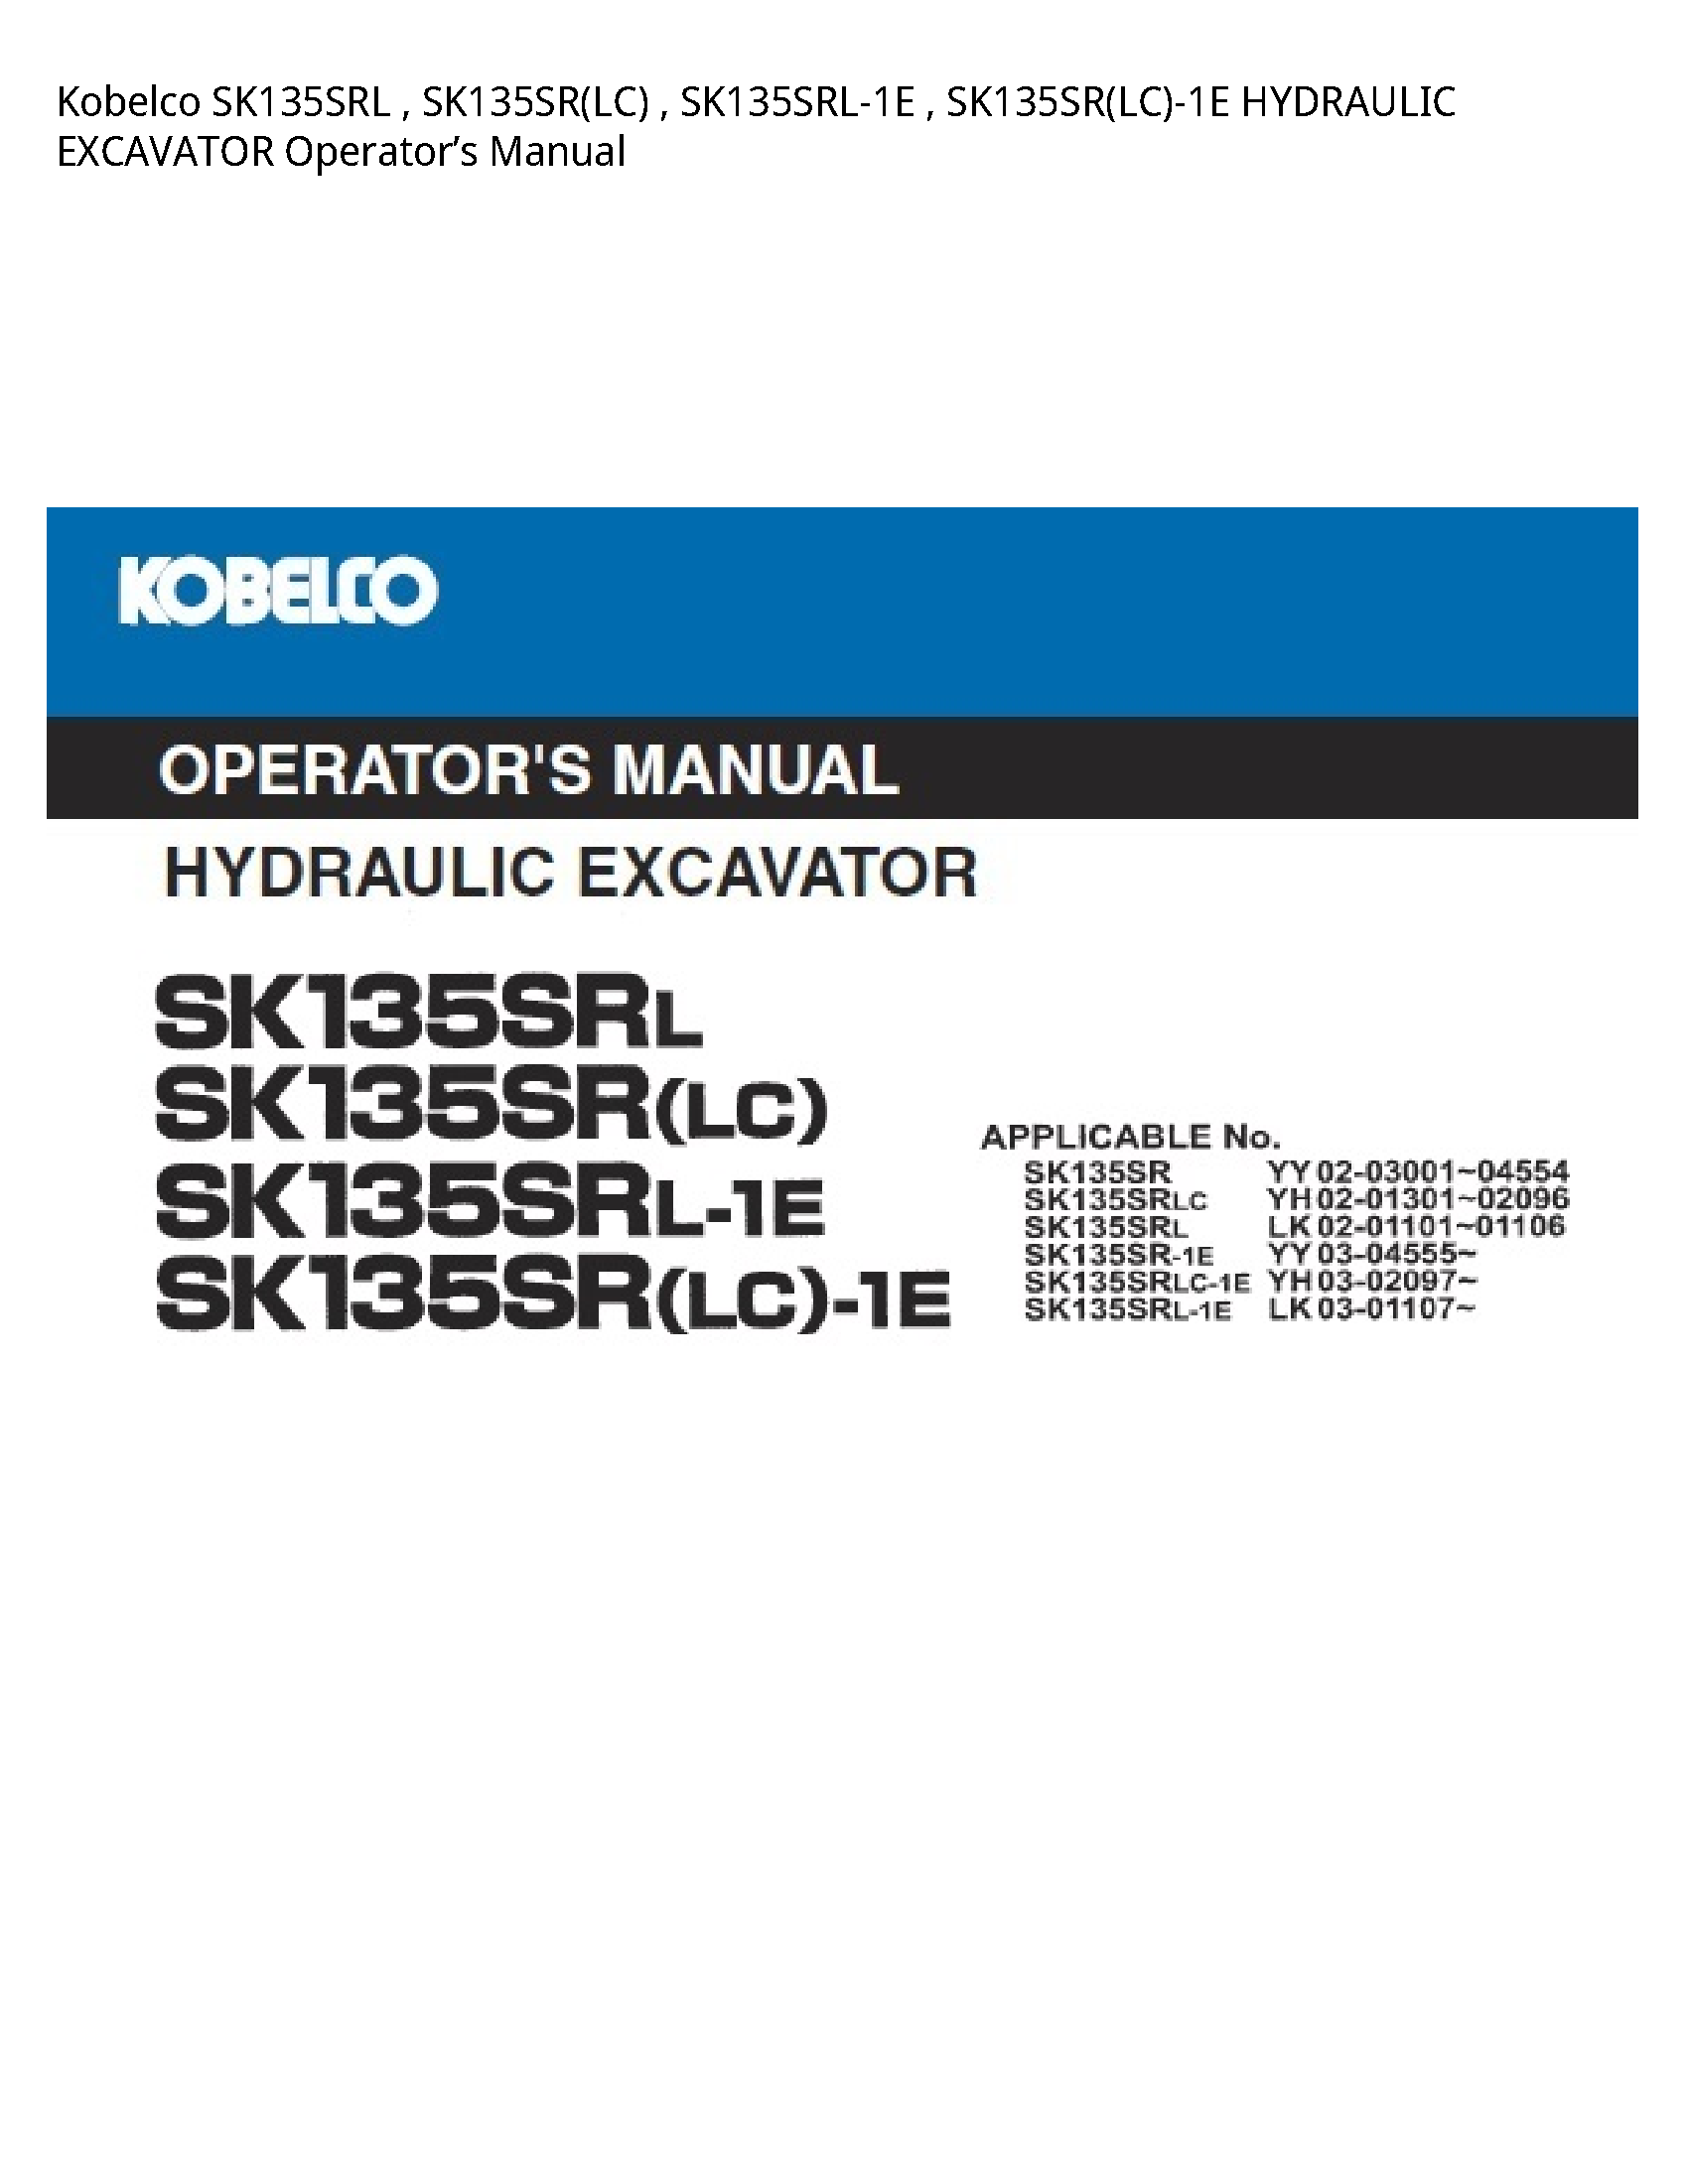 Kobelco SK135SRL HYDRAULIC EXCAVATOR Operator’s manual